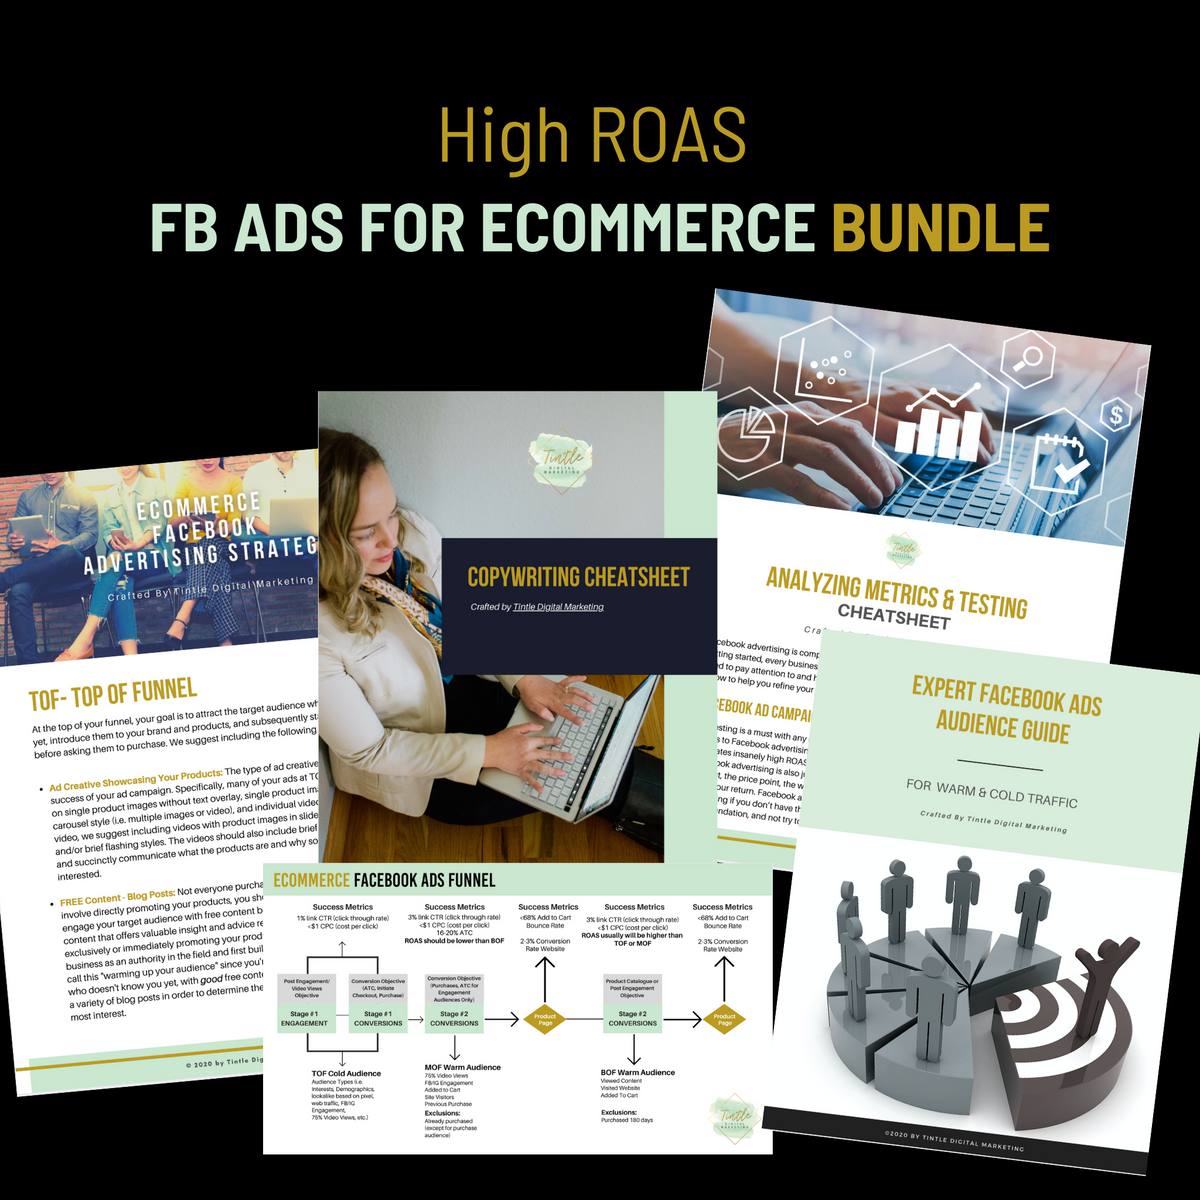 High ROAS Facebook Ads For Ecommerce Bundle